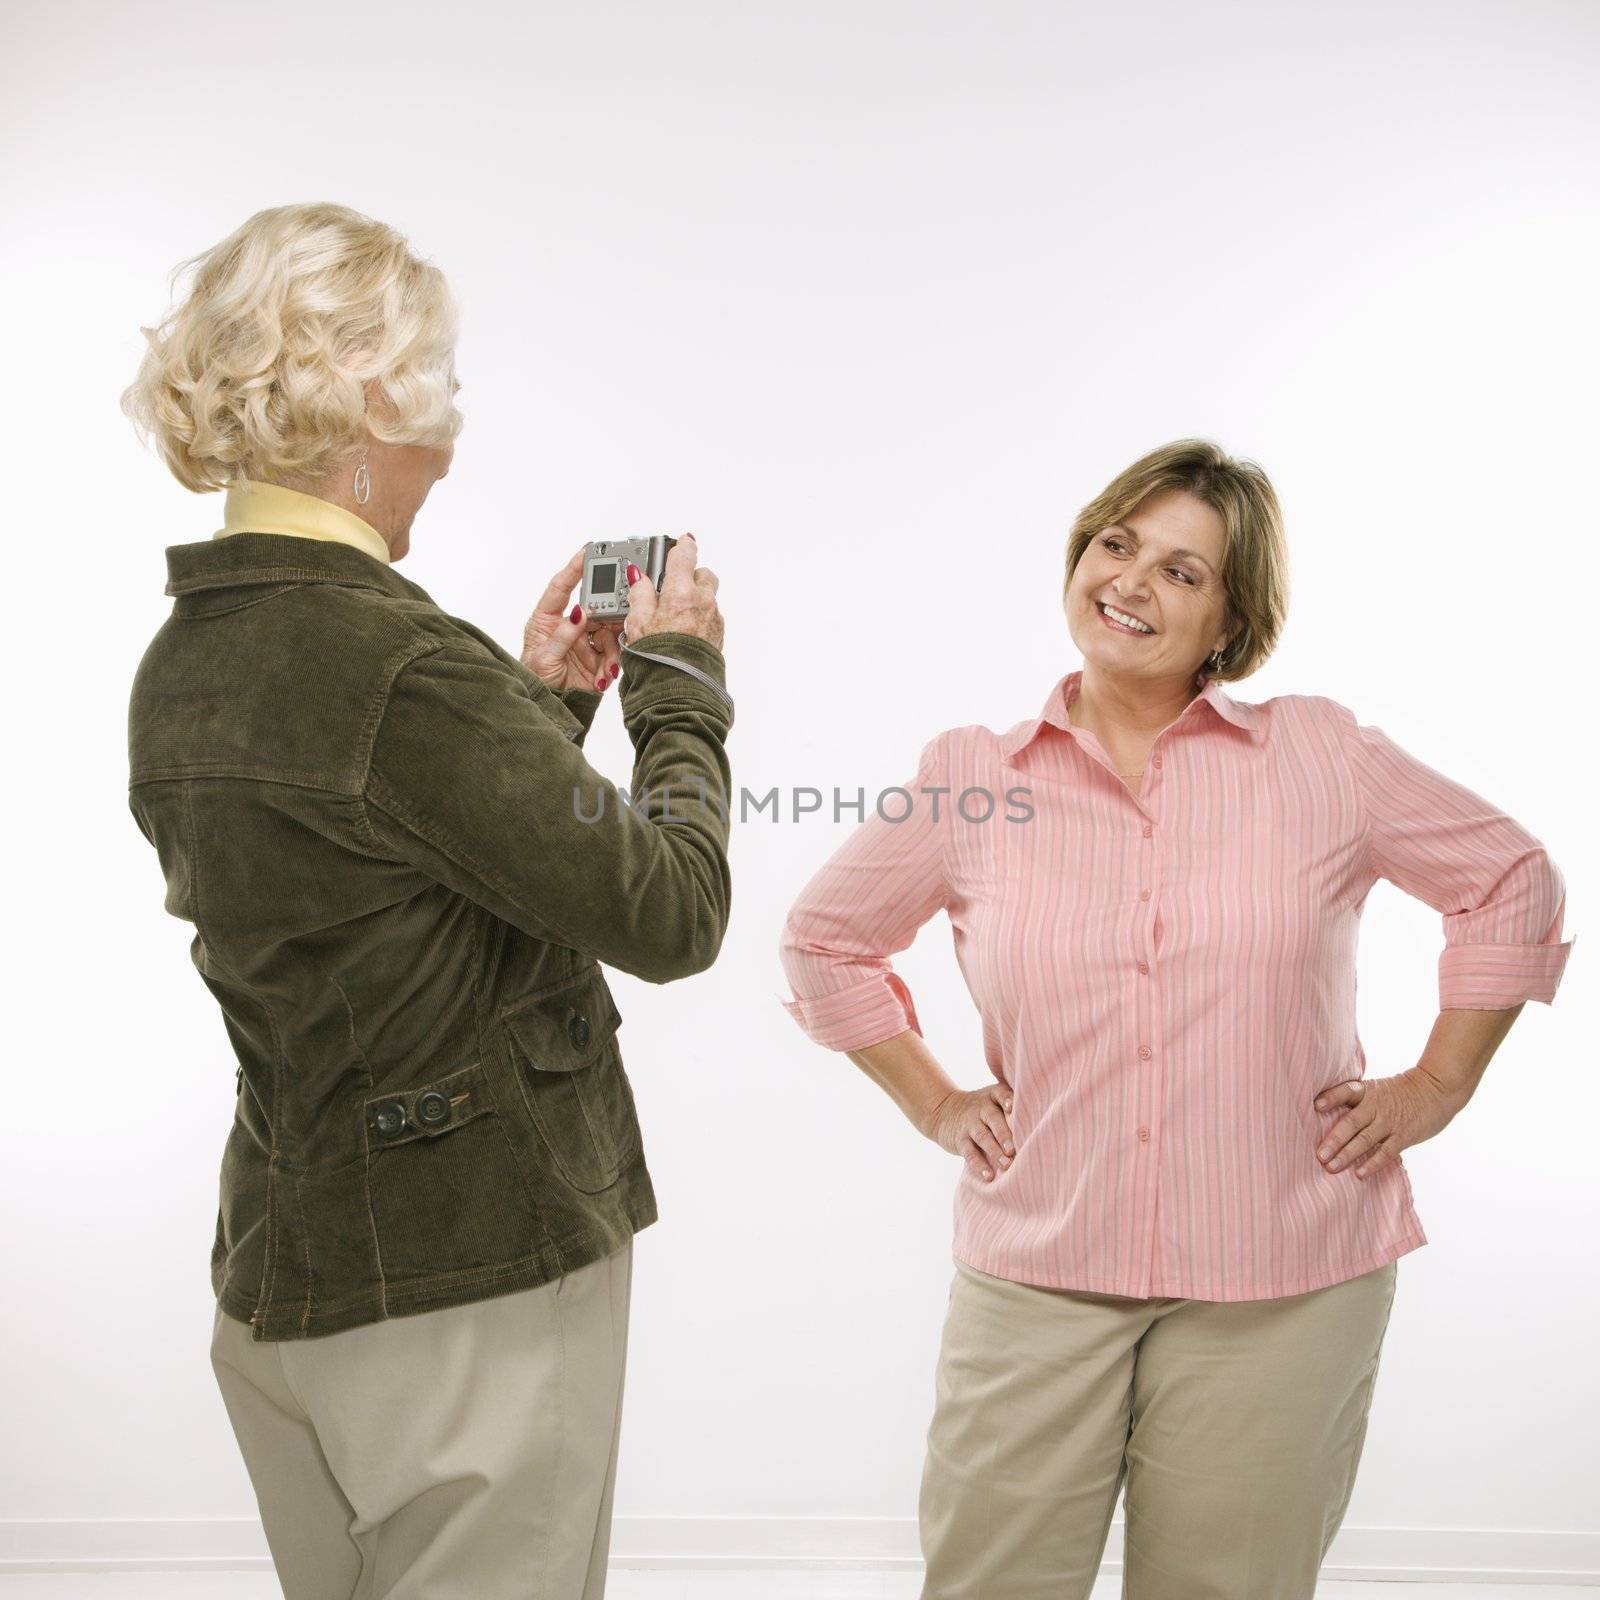 Women using digital camera. by iofoto